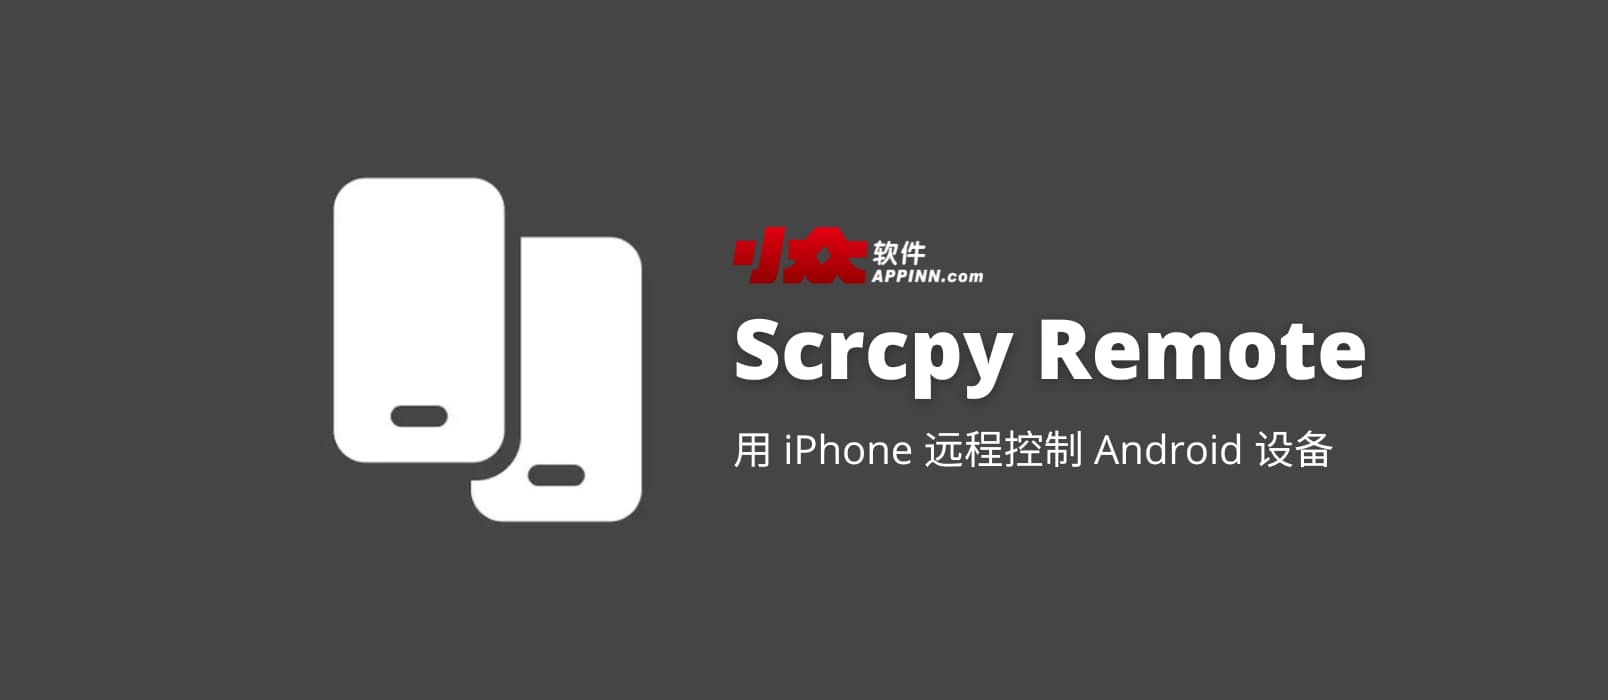  Scrcpy Remote - 用 iPhone 远程控制 Android 设备[iOS]